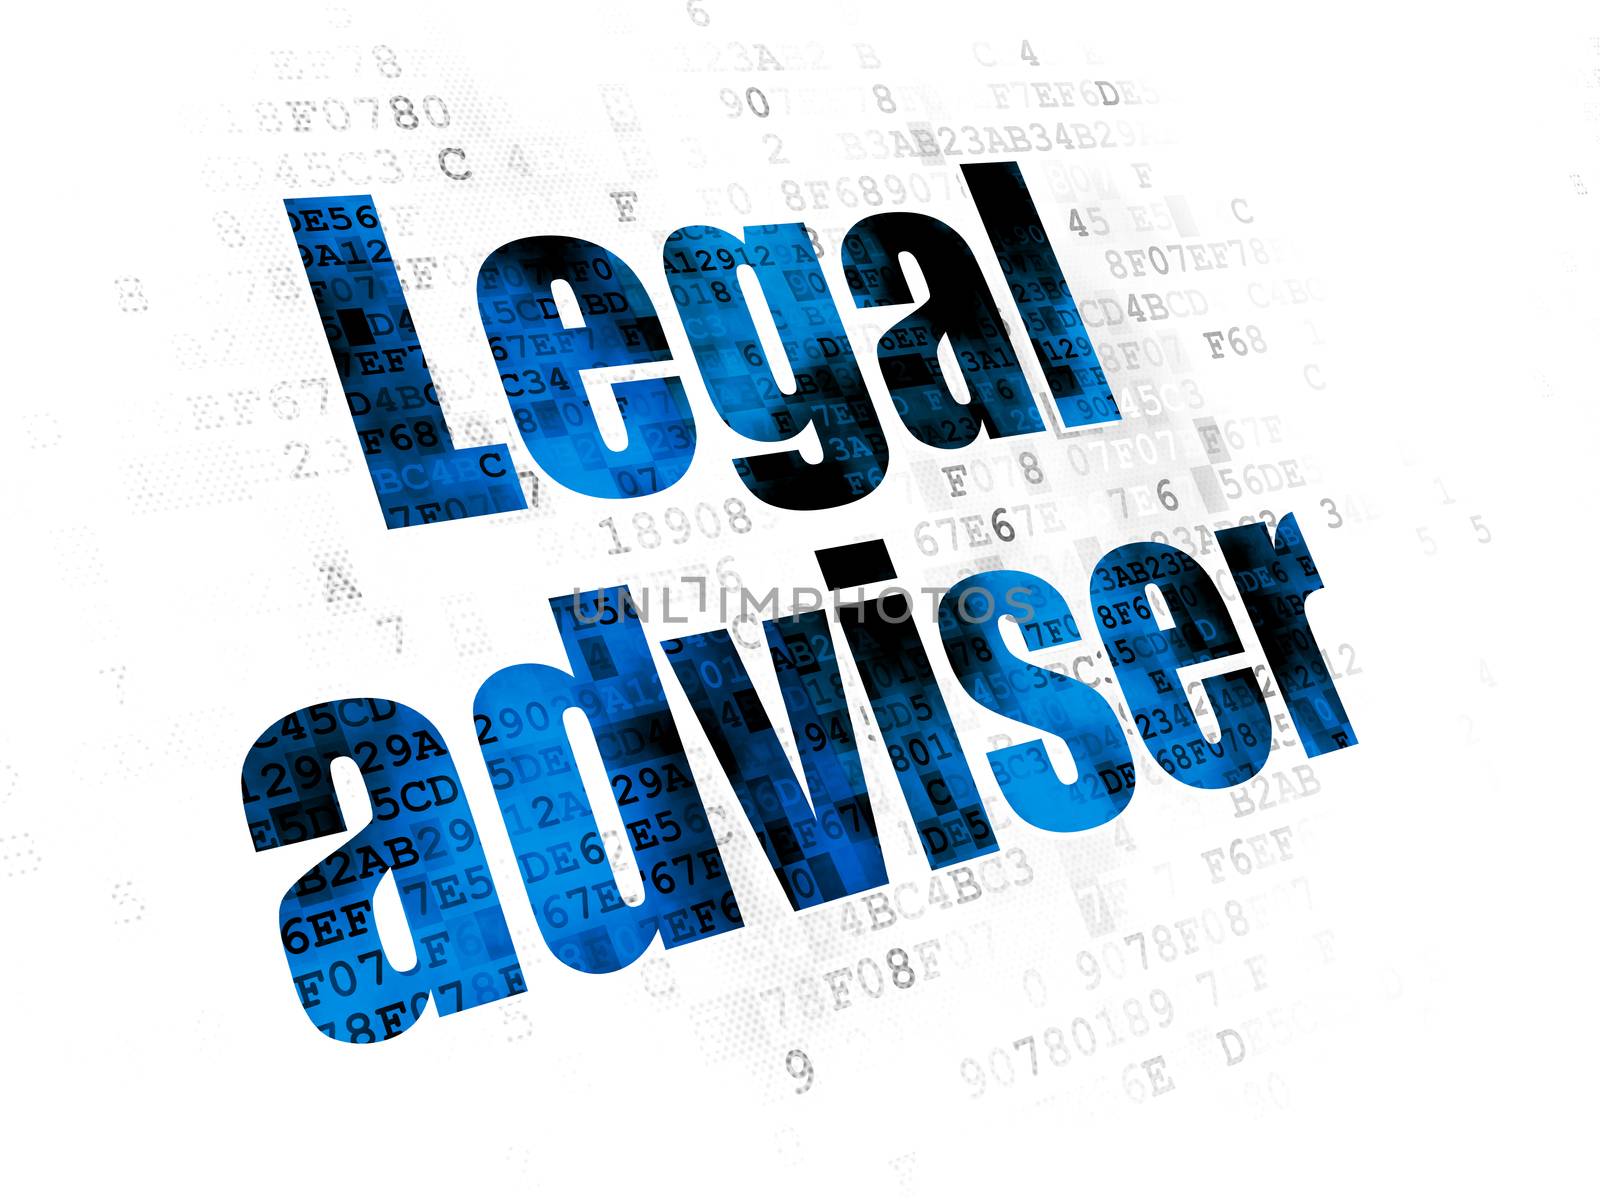 Law concept: Legal Adviser on Digital background by maxkabakov